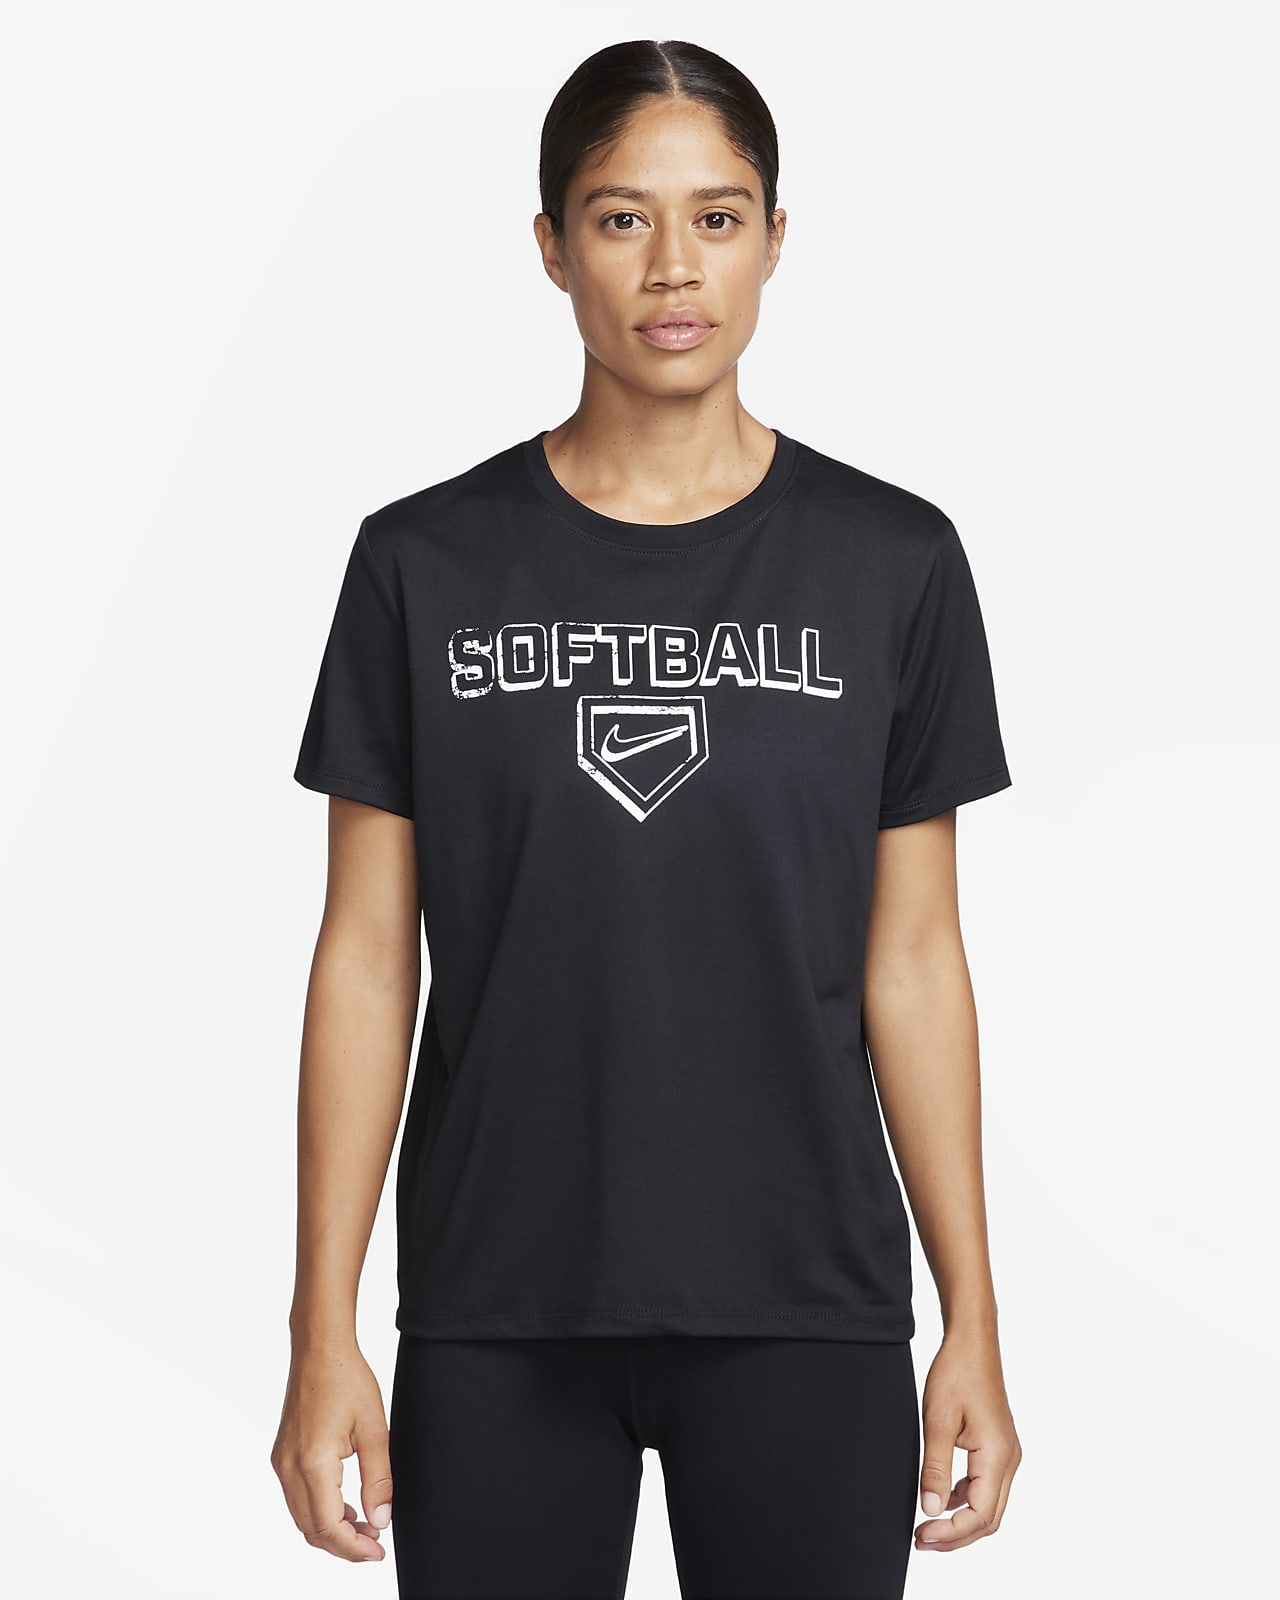 Nike Dri-FIT Women's Softball T-Shirt